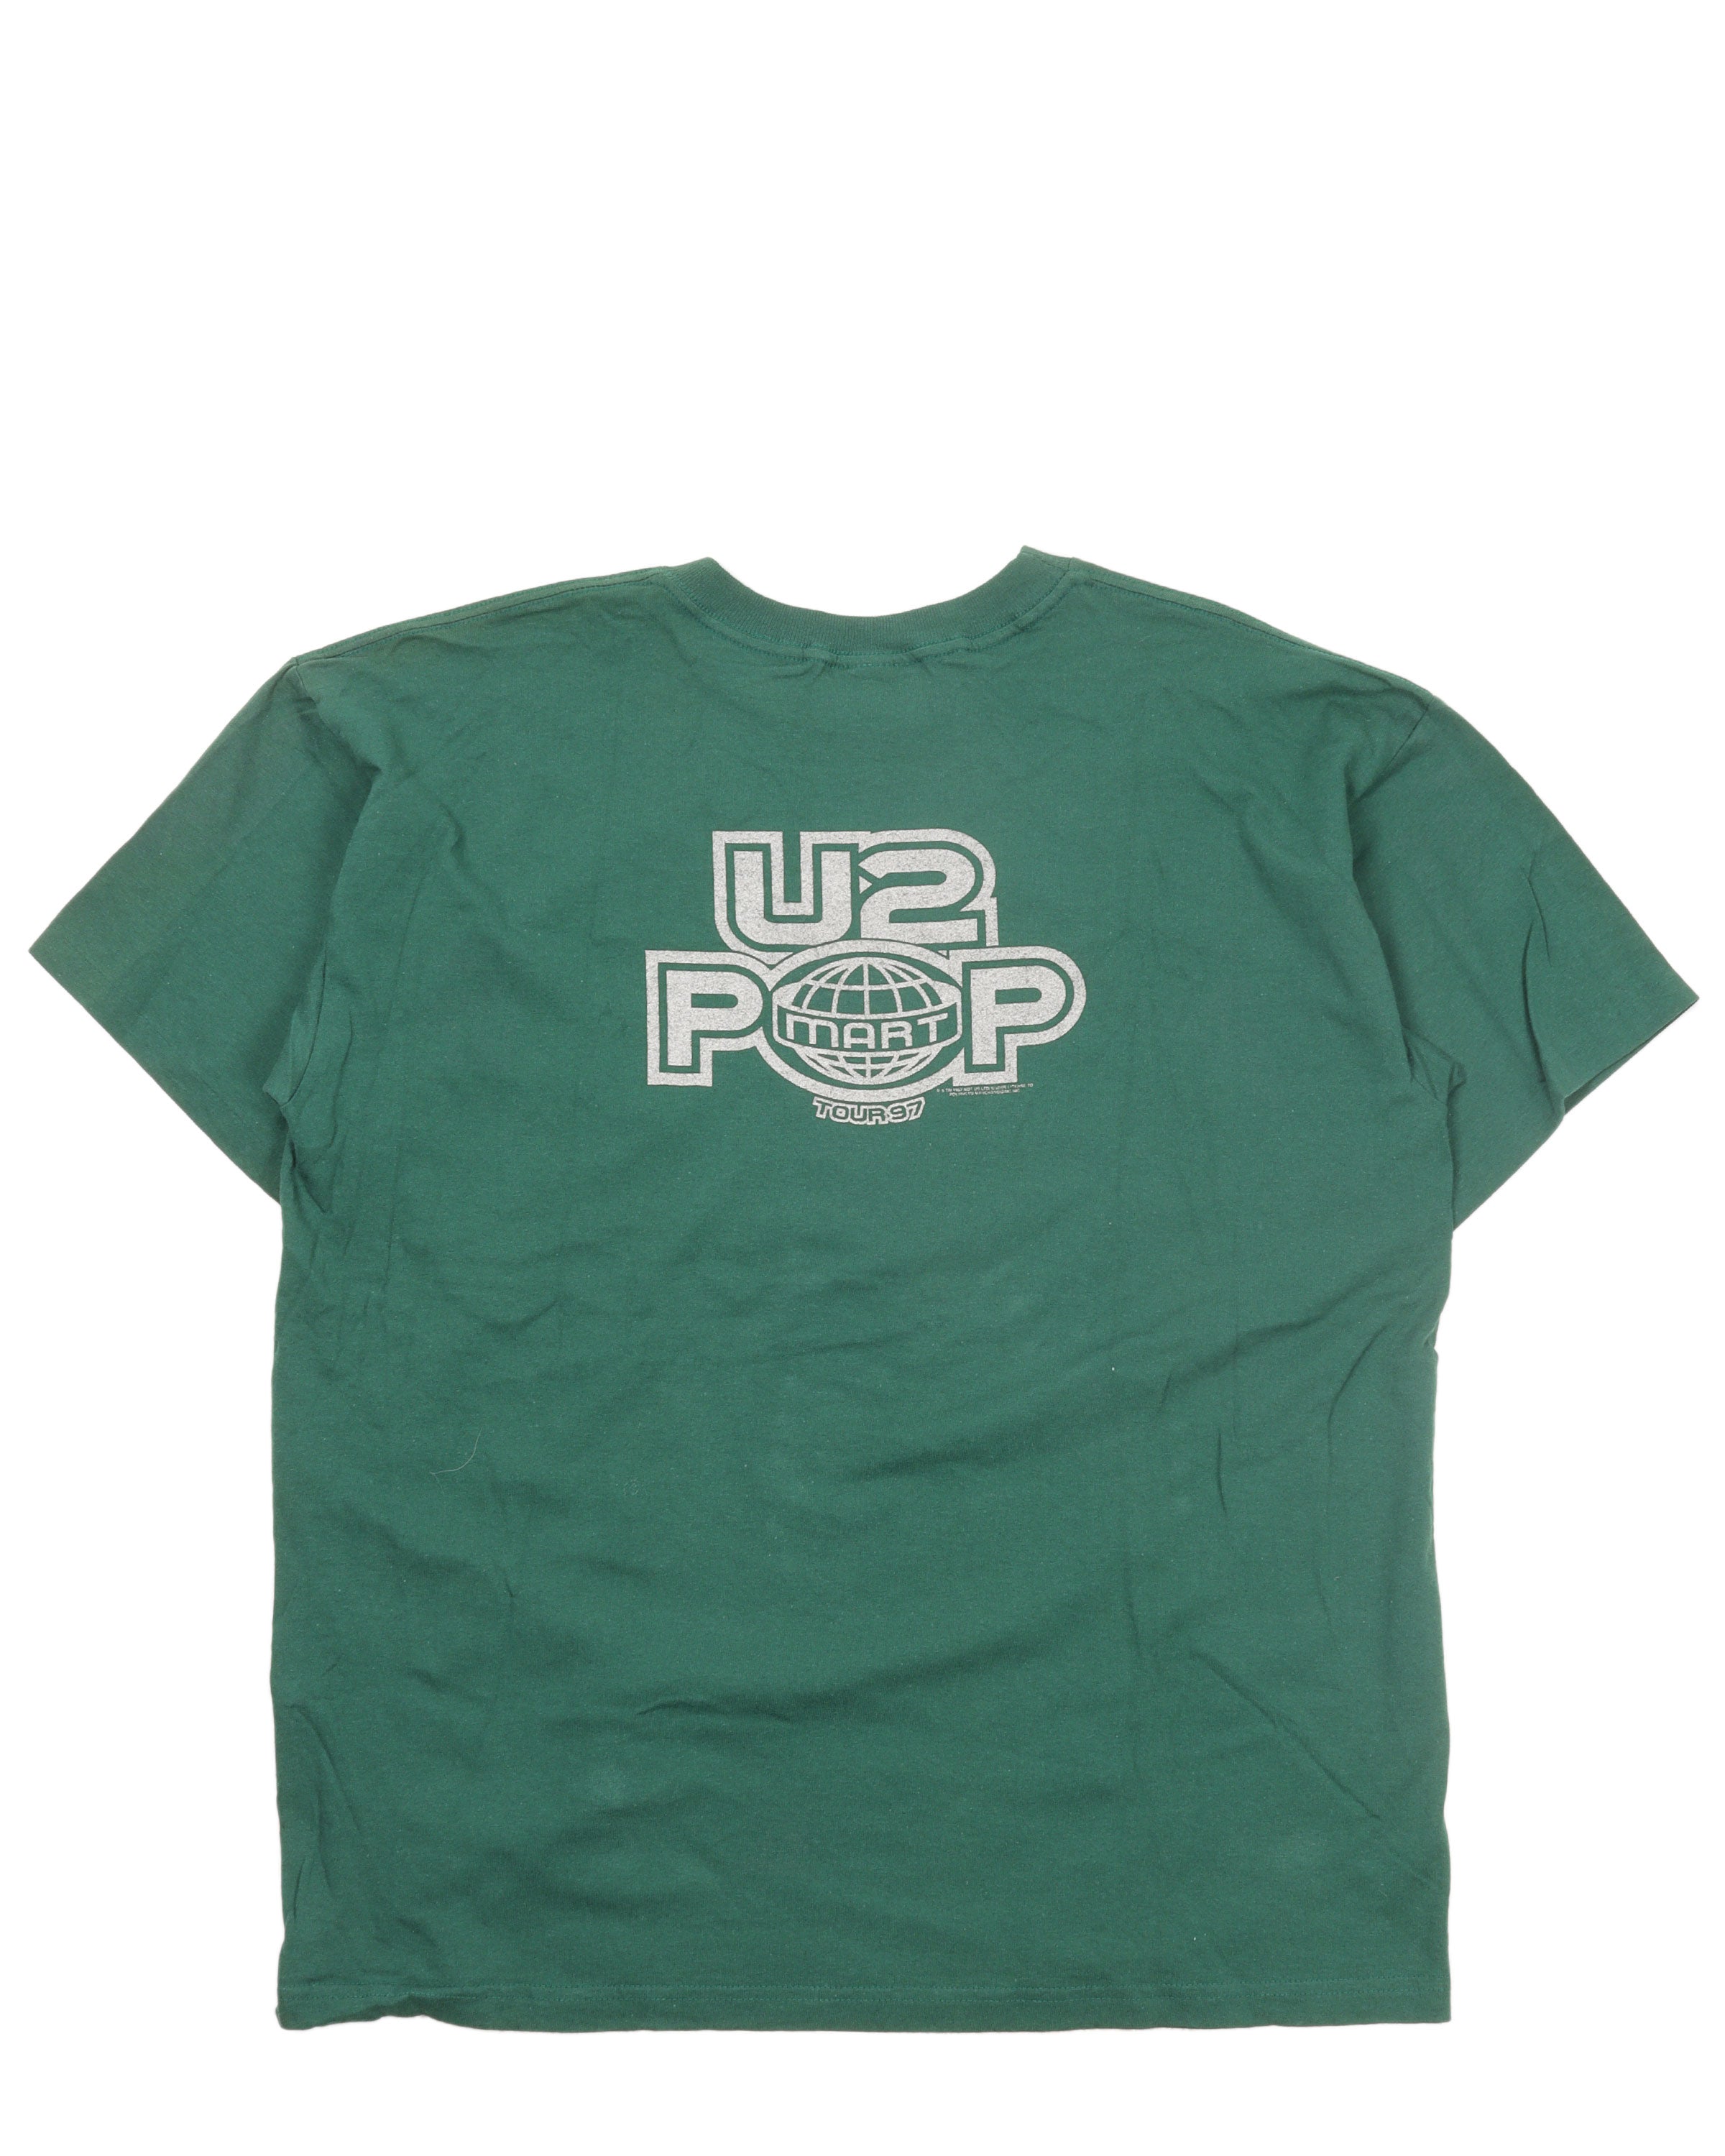 U2 "PopMart" 1997 Tour T-Shirt